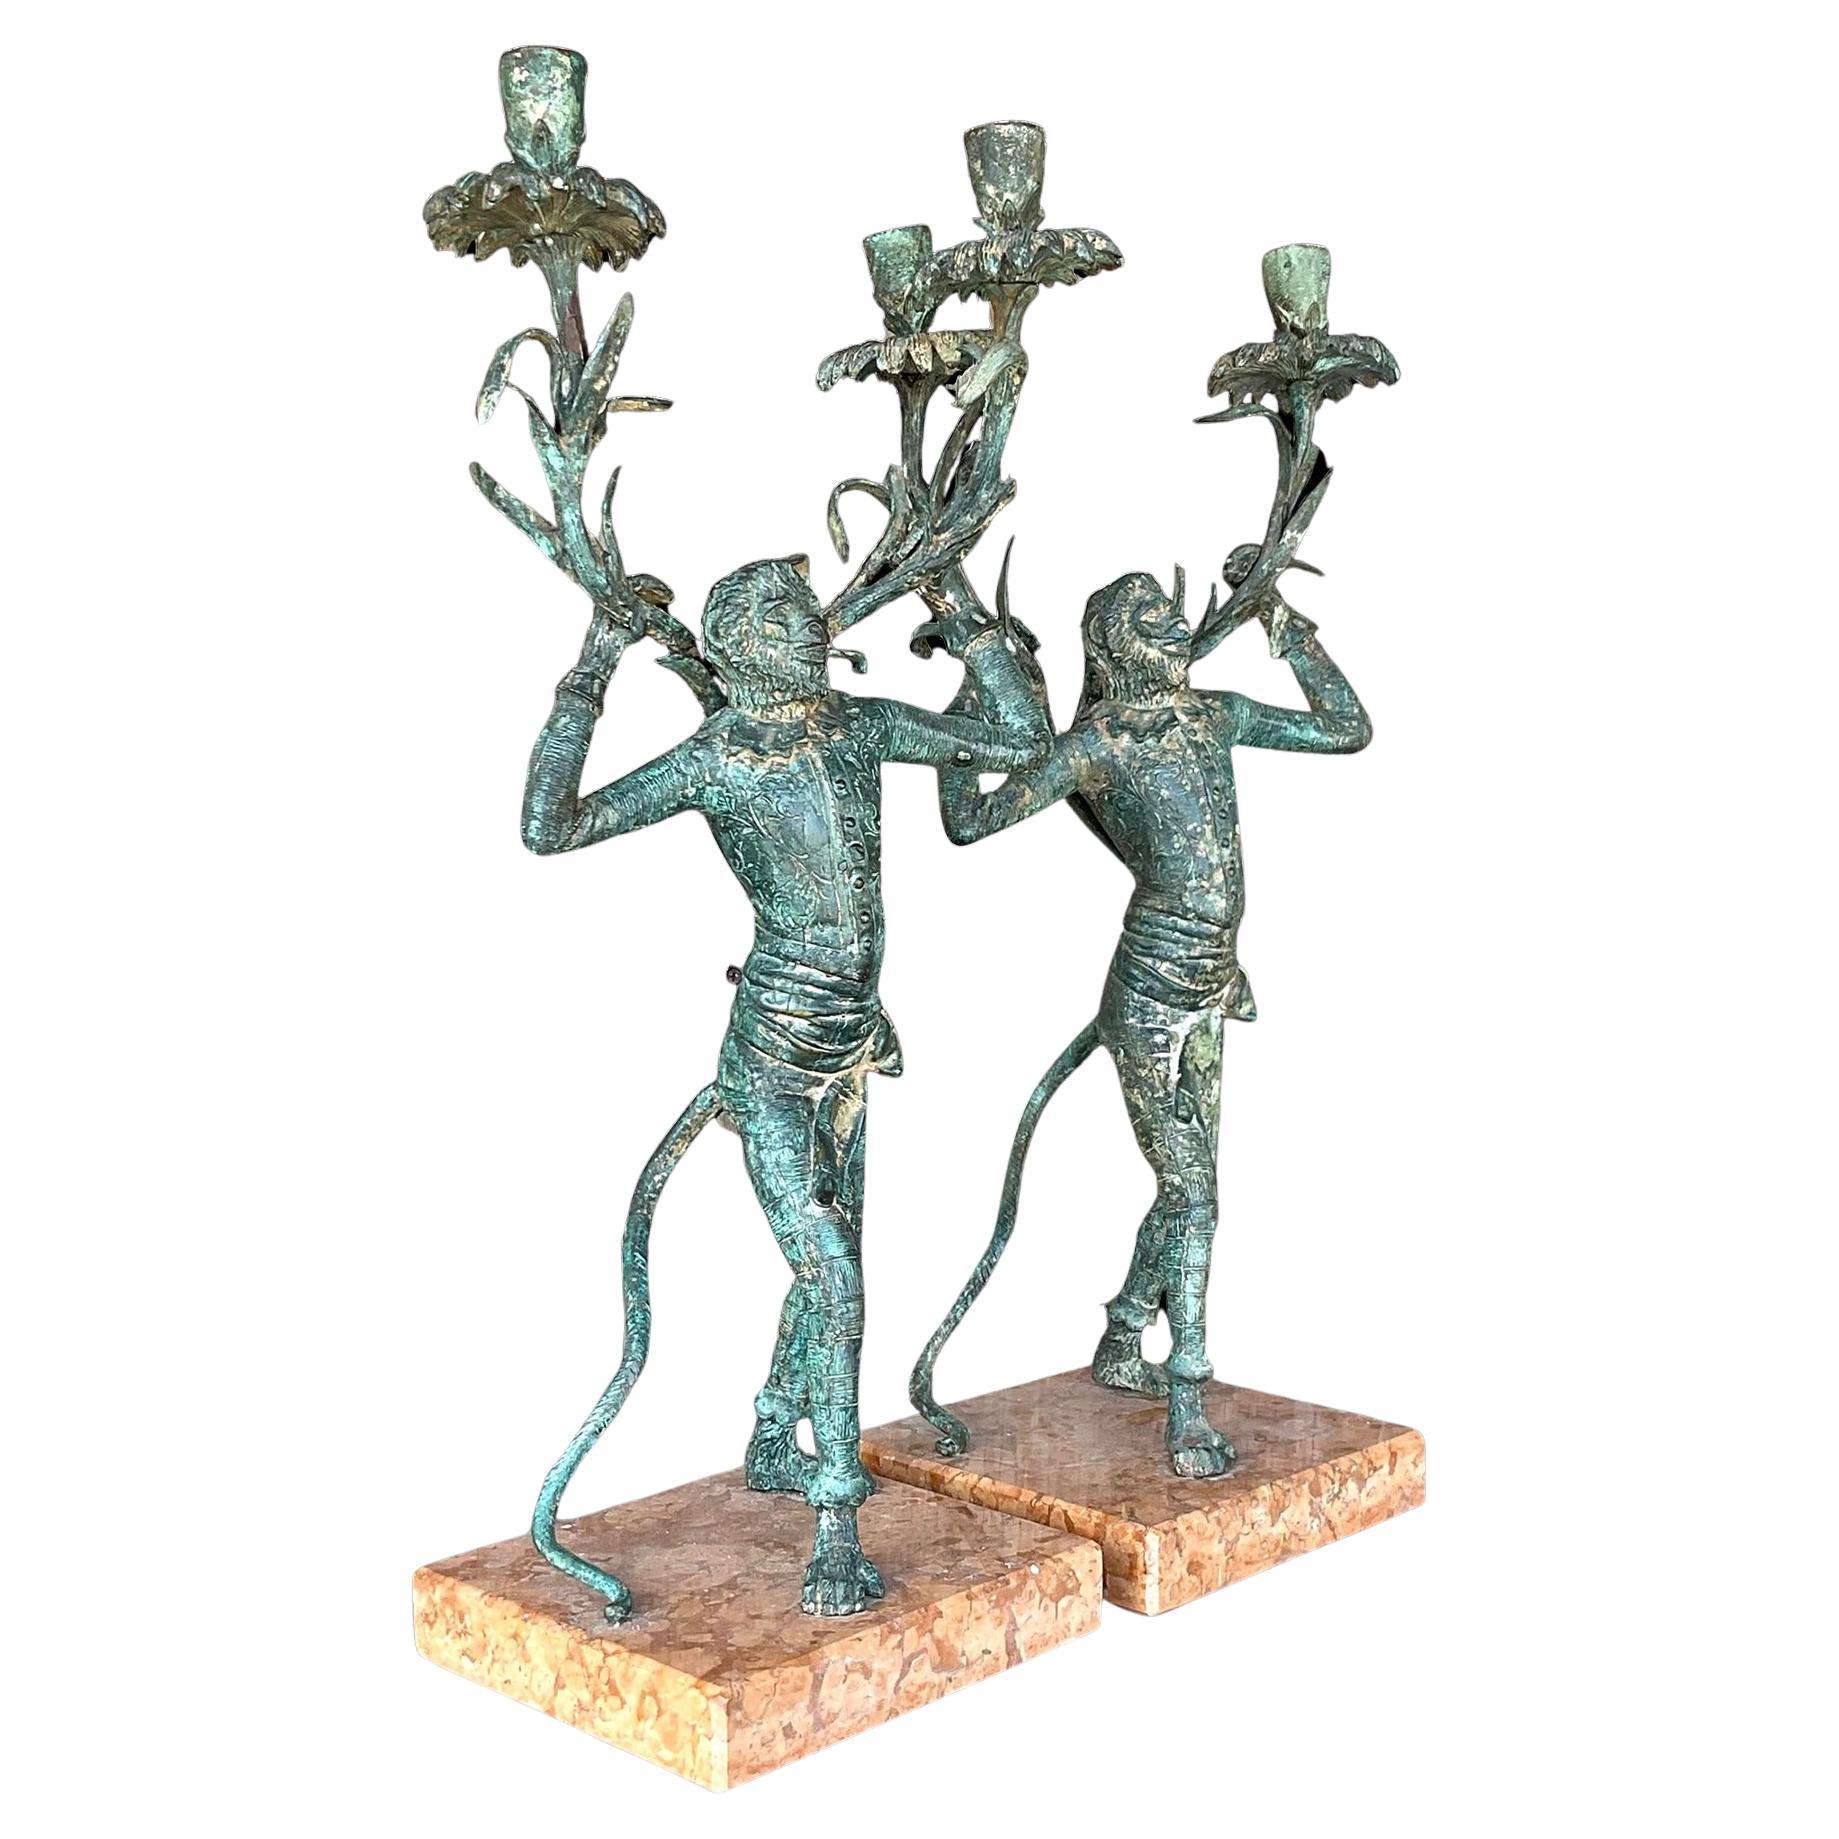 Monumentale Vintage-Affenkandelaber aus Bronze im Regency-Stil, Paar